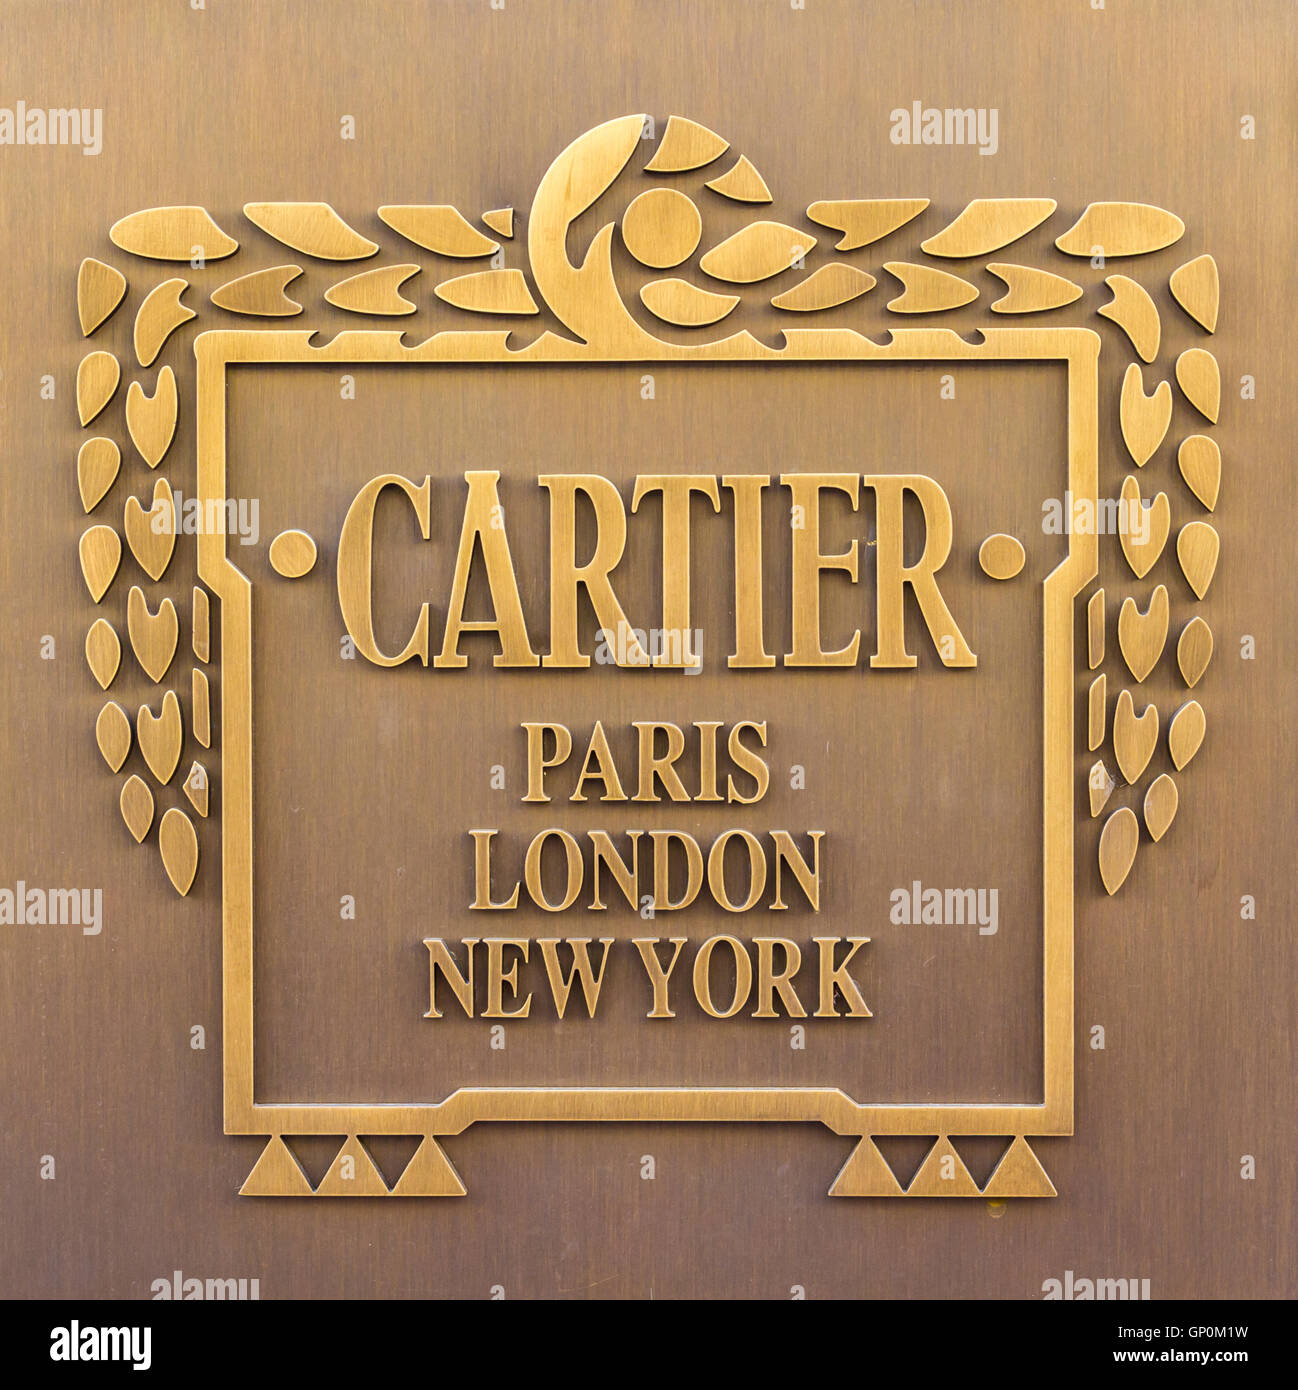 cartier paris london new york